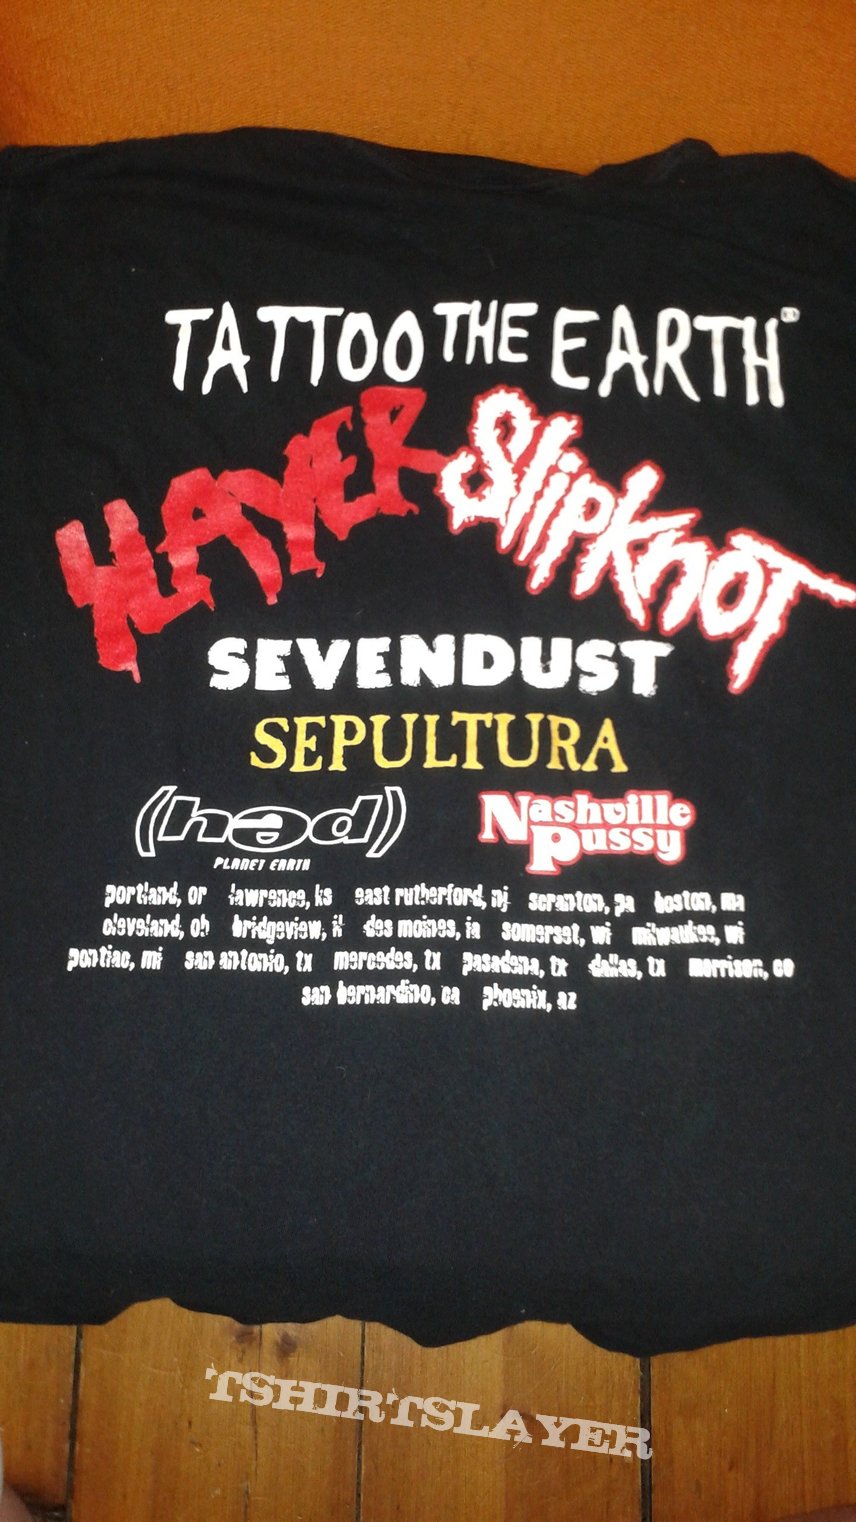 Tattoo The Earth package tour 2000 Slayer, Sepultura, Slipknot, Sevendust, (Hed) PE, Nashville Pussy t-shirt.